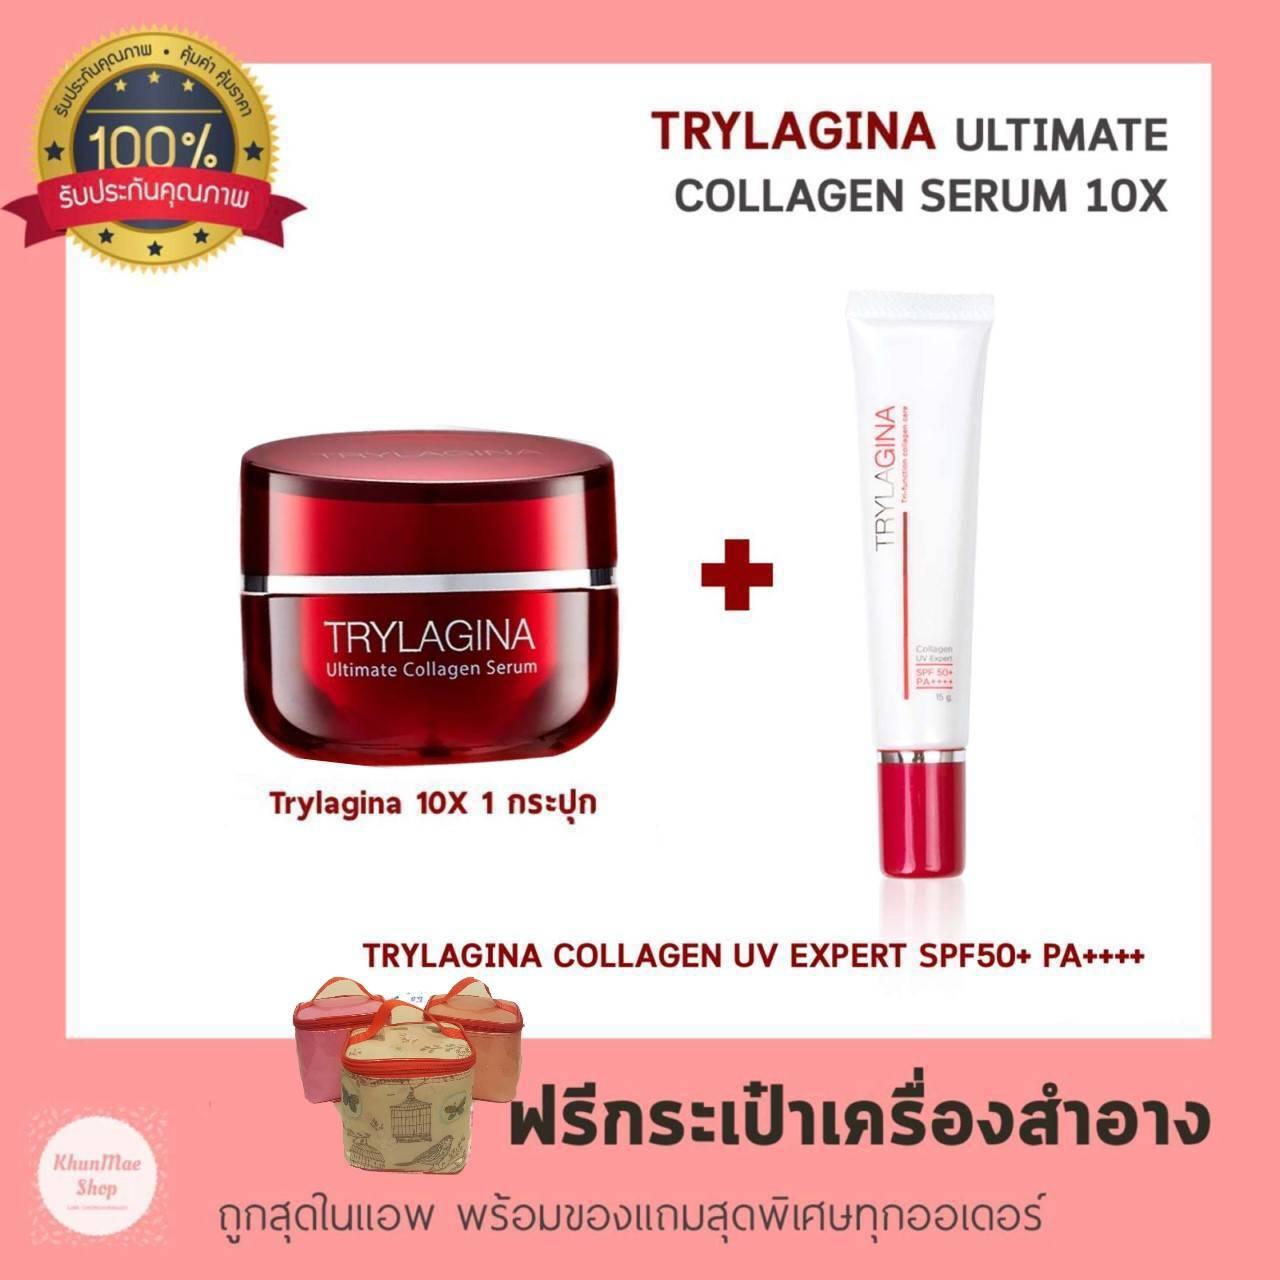 TRYLAGINA ULTIMATE COLLAGEN SERUM 10X + Trylagina Collagen UV Expert SPF50+PA++++